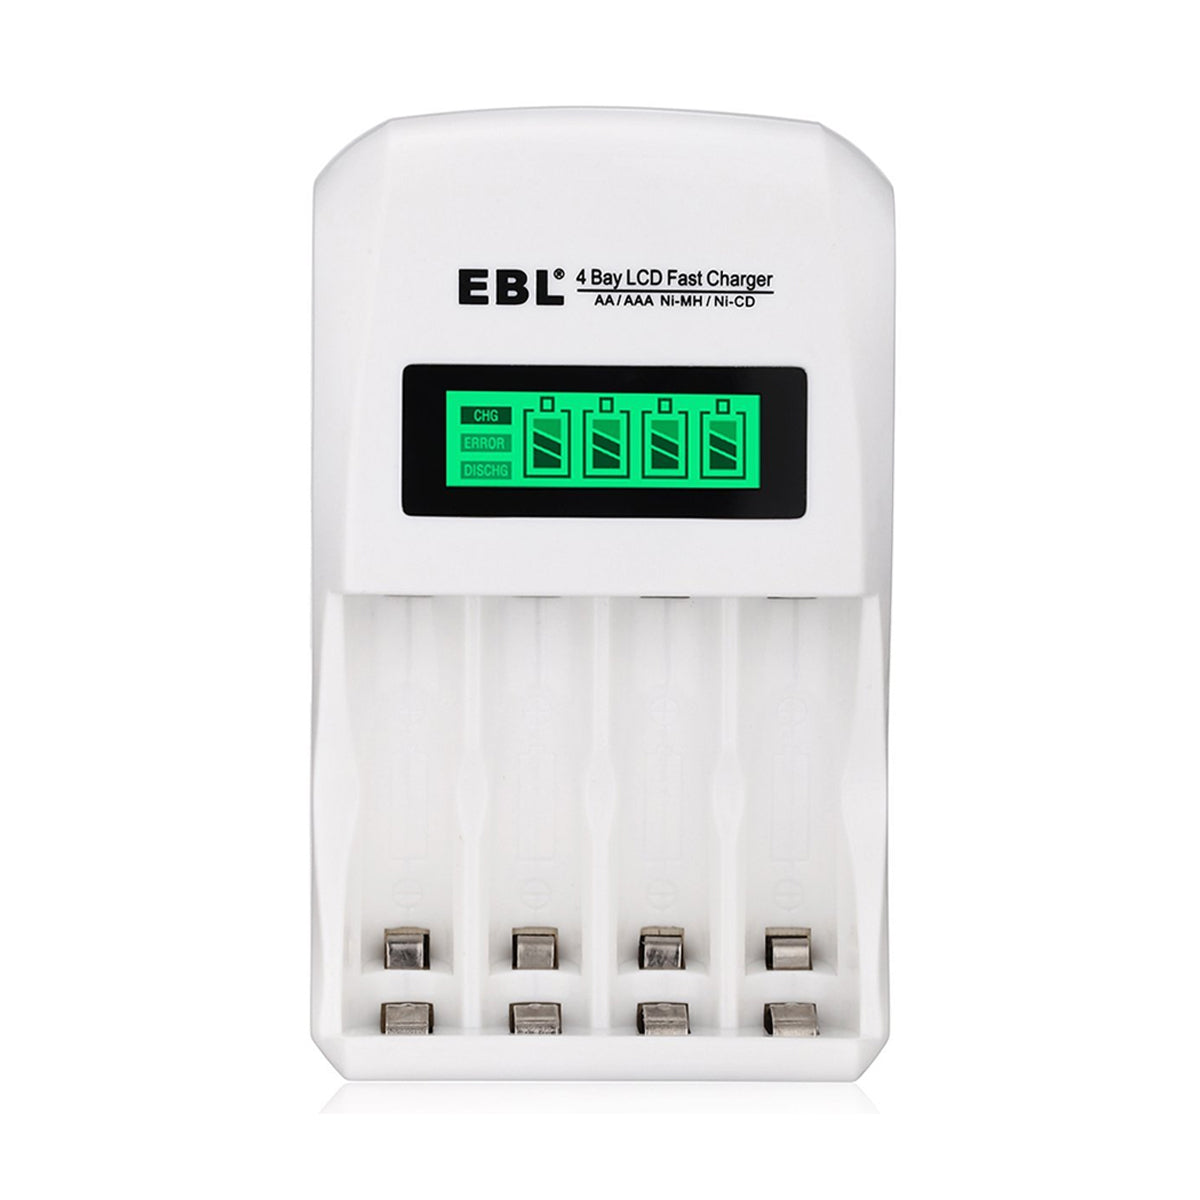 EBL 1.5V Li-ion Battery Charger for AA AAA Li-ion Rechargeable Batteries